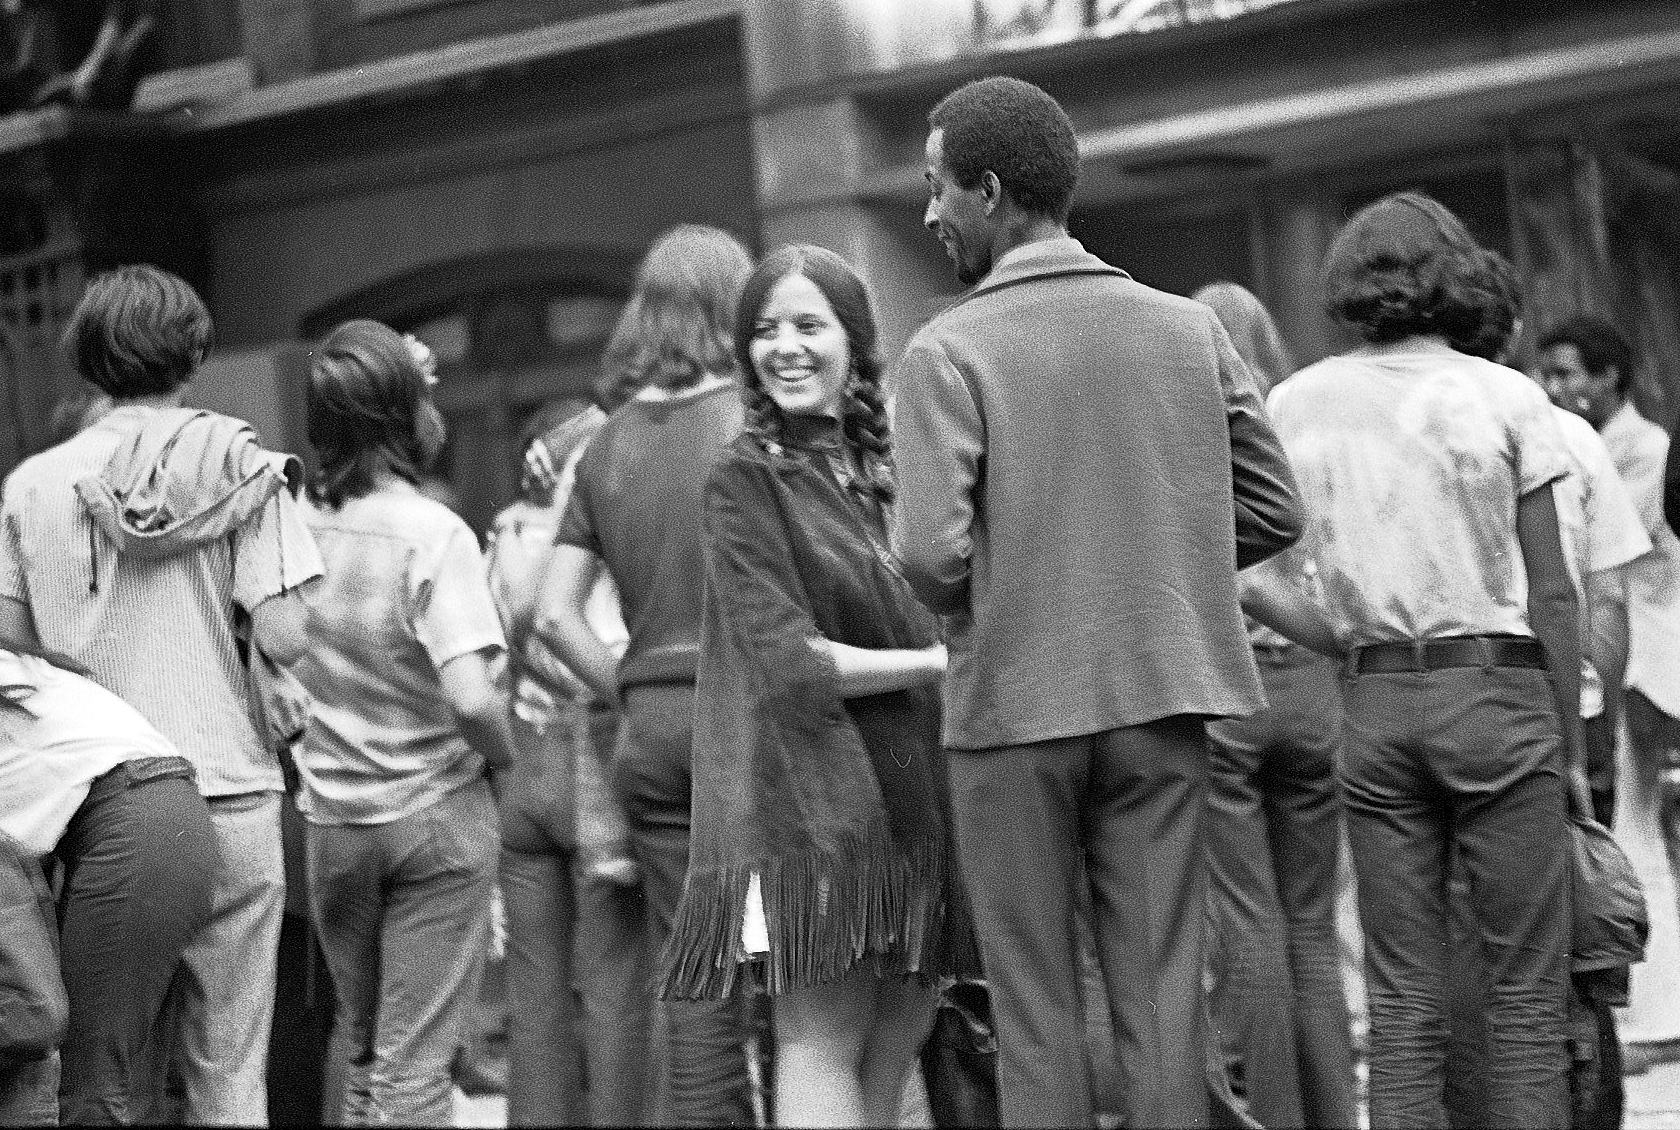 Baldwin Street, Toronto, 1970.